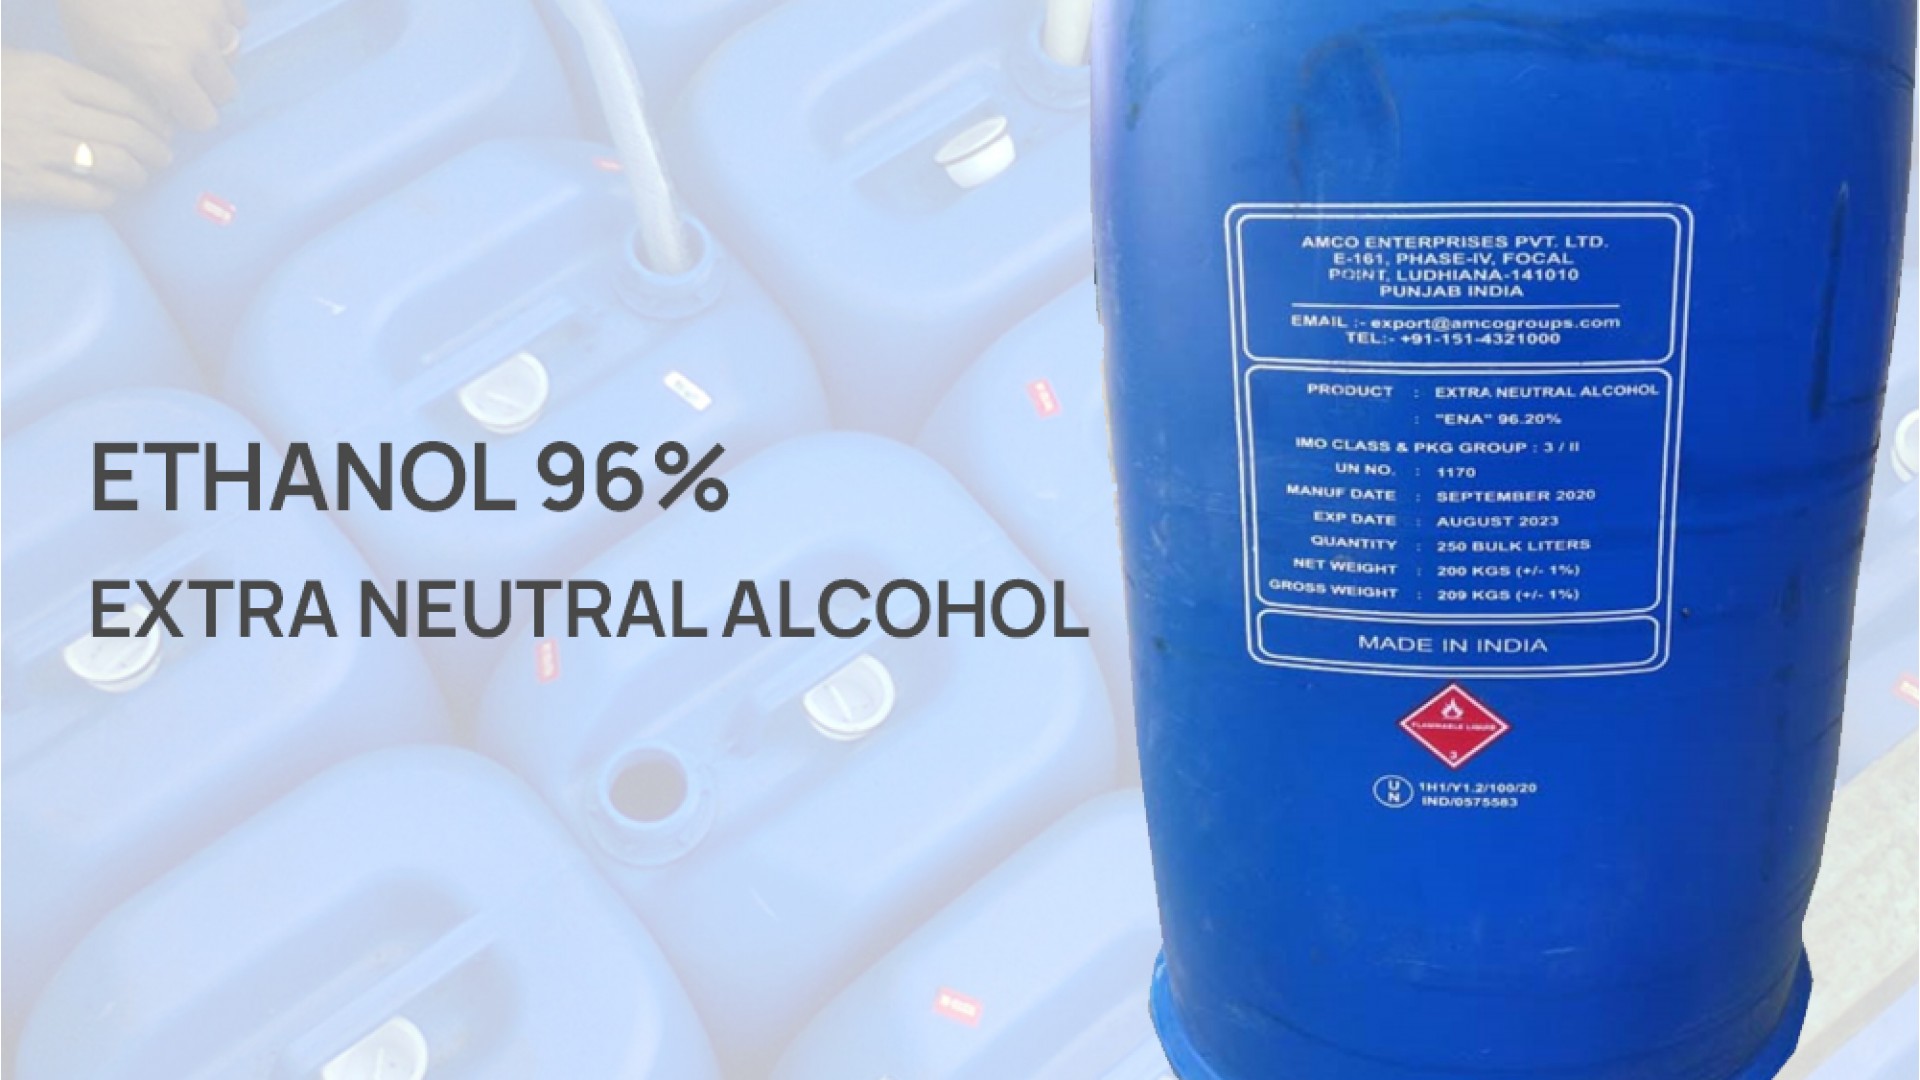 ETHANOL 96% (Extra Neutral Alcohol)